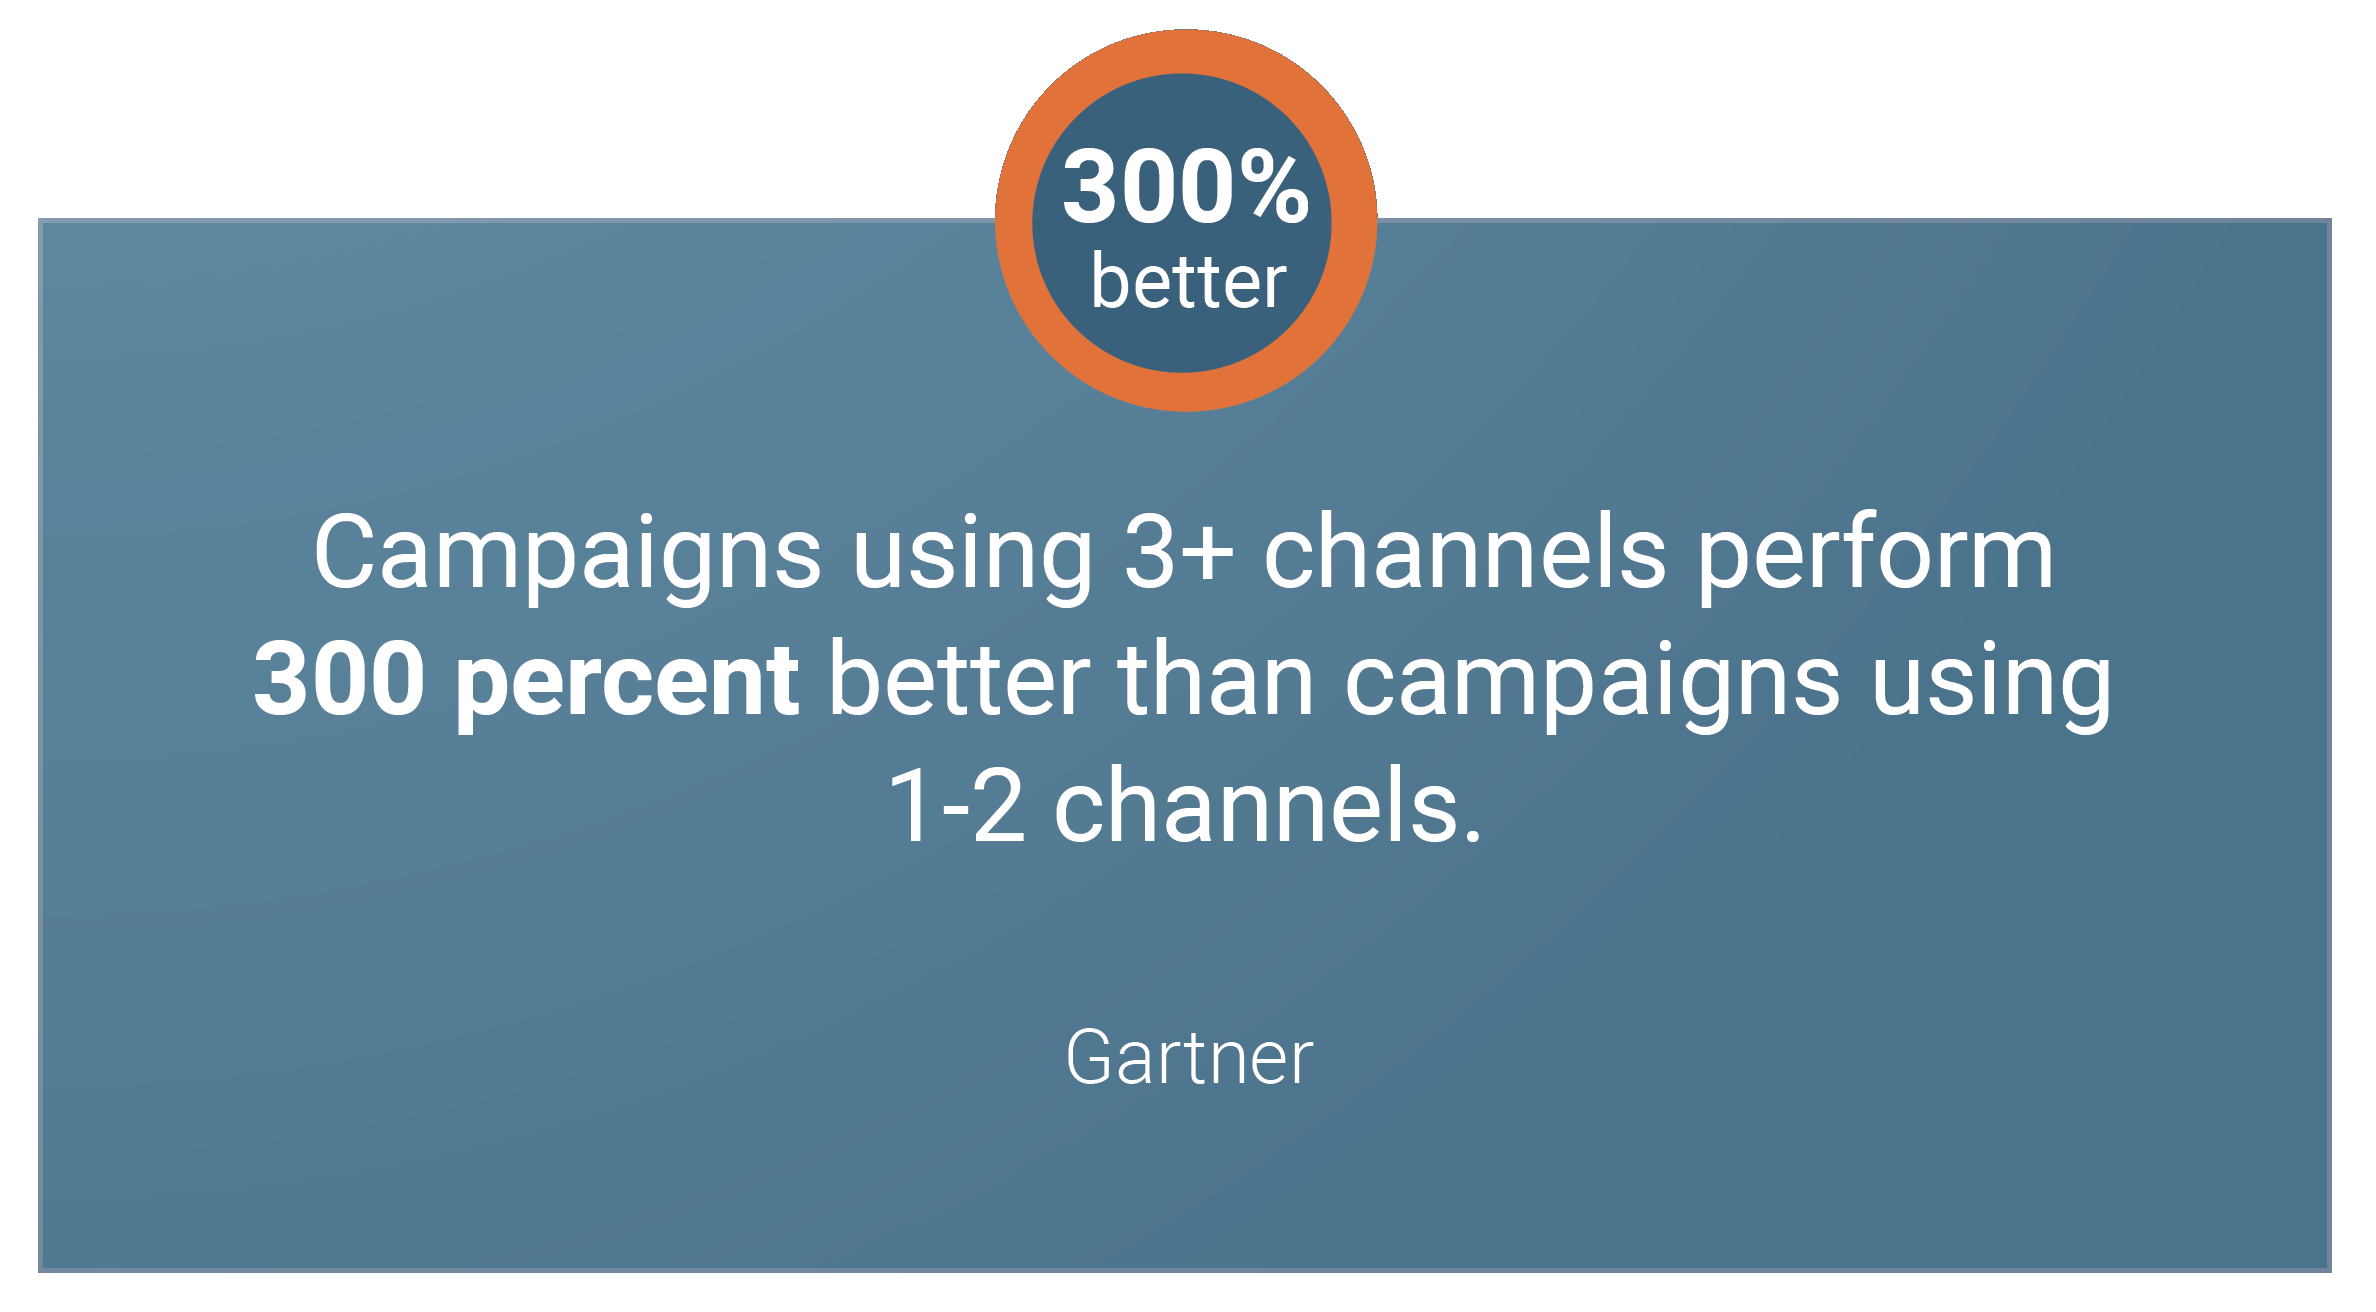 multichannel campaigns perform 300% better